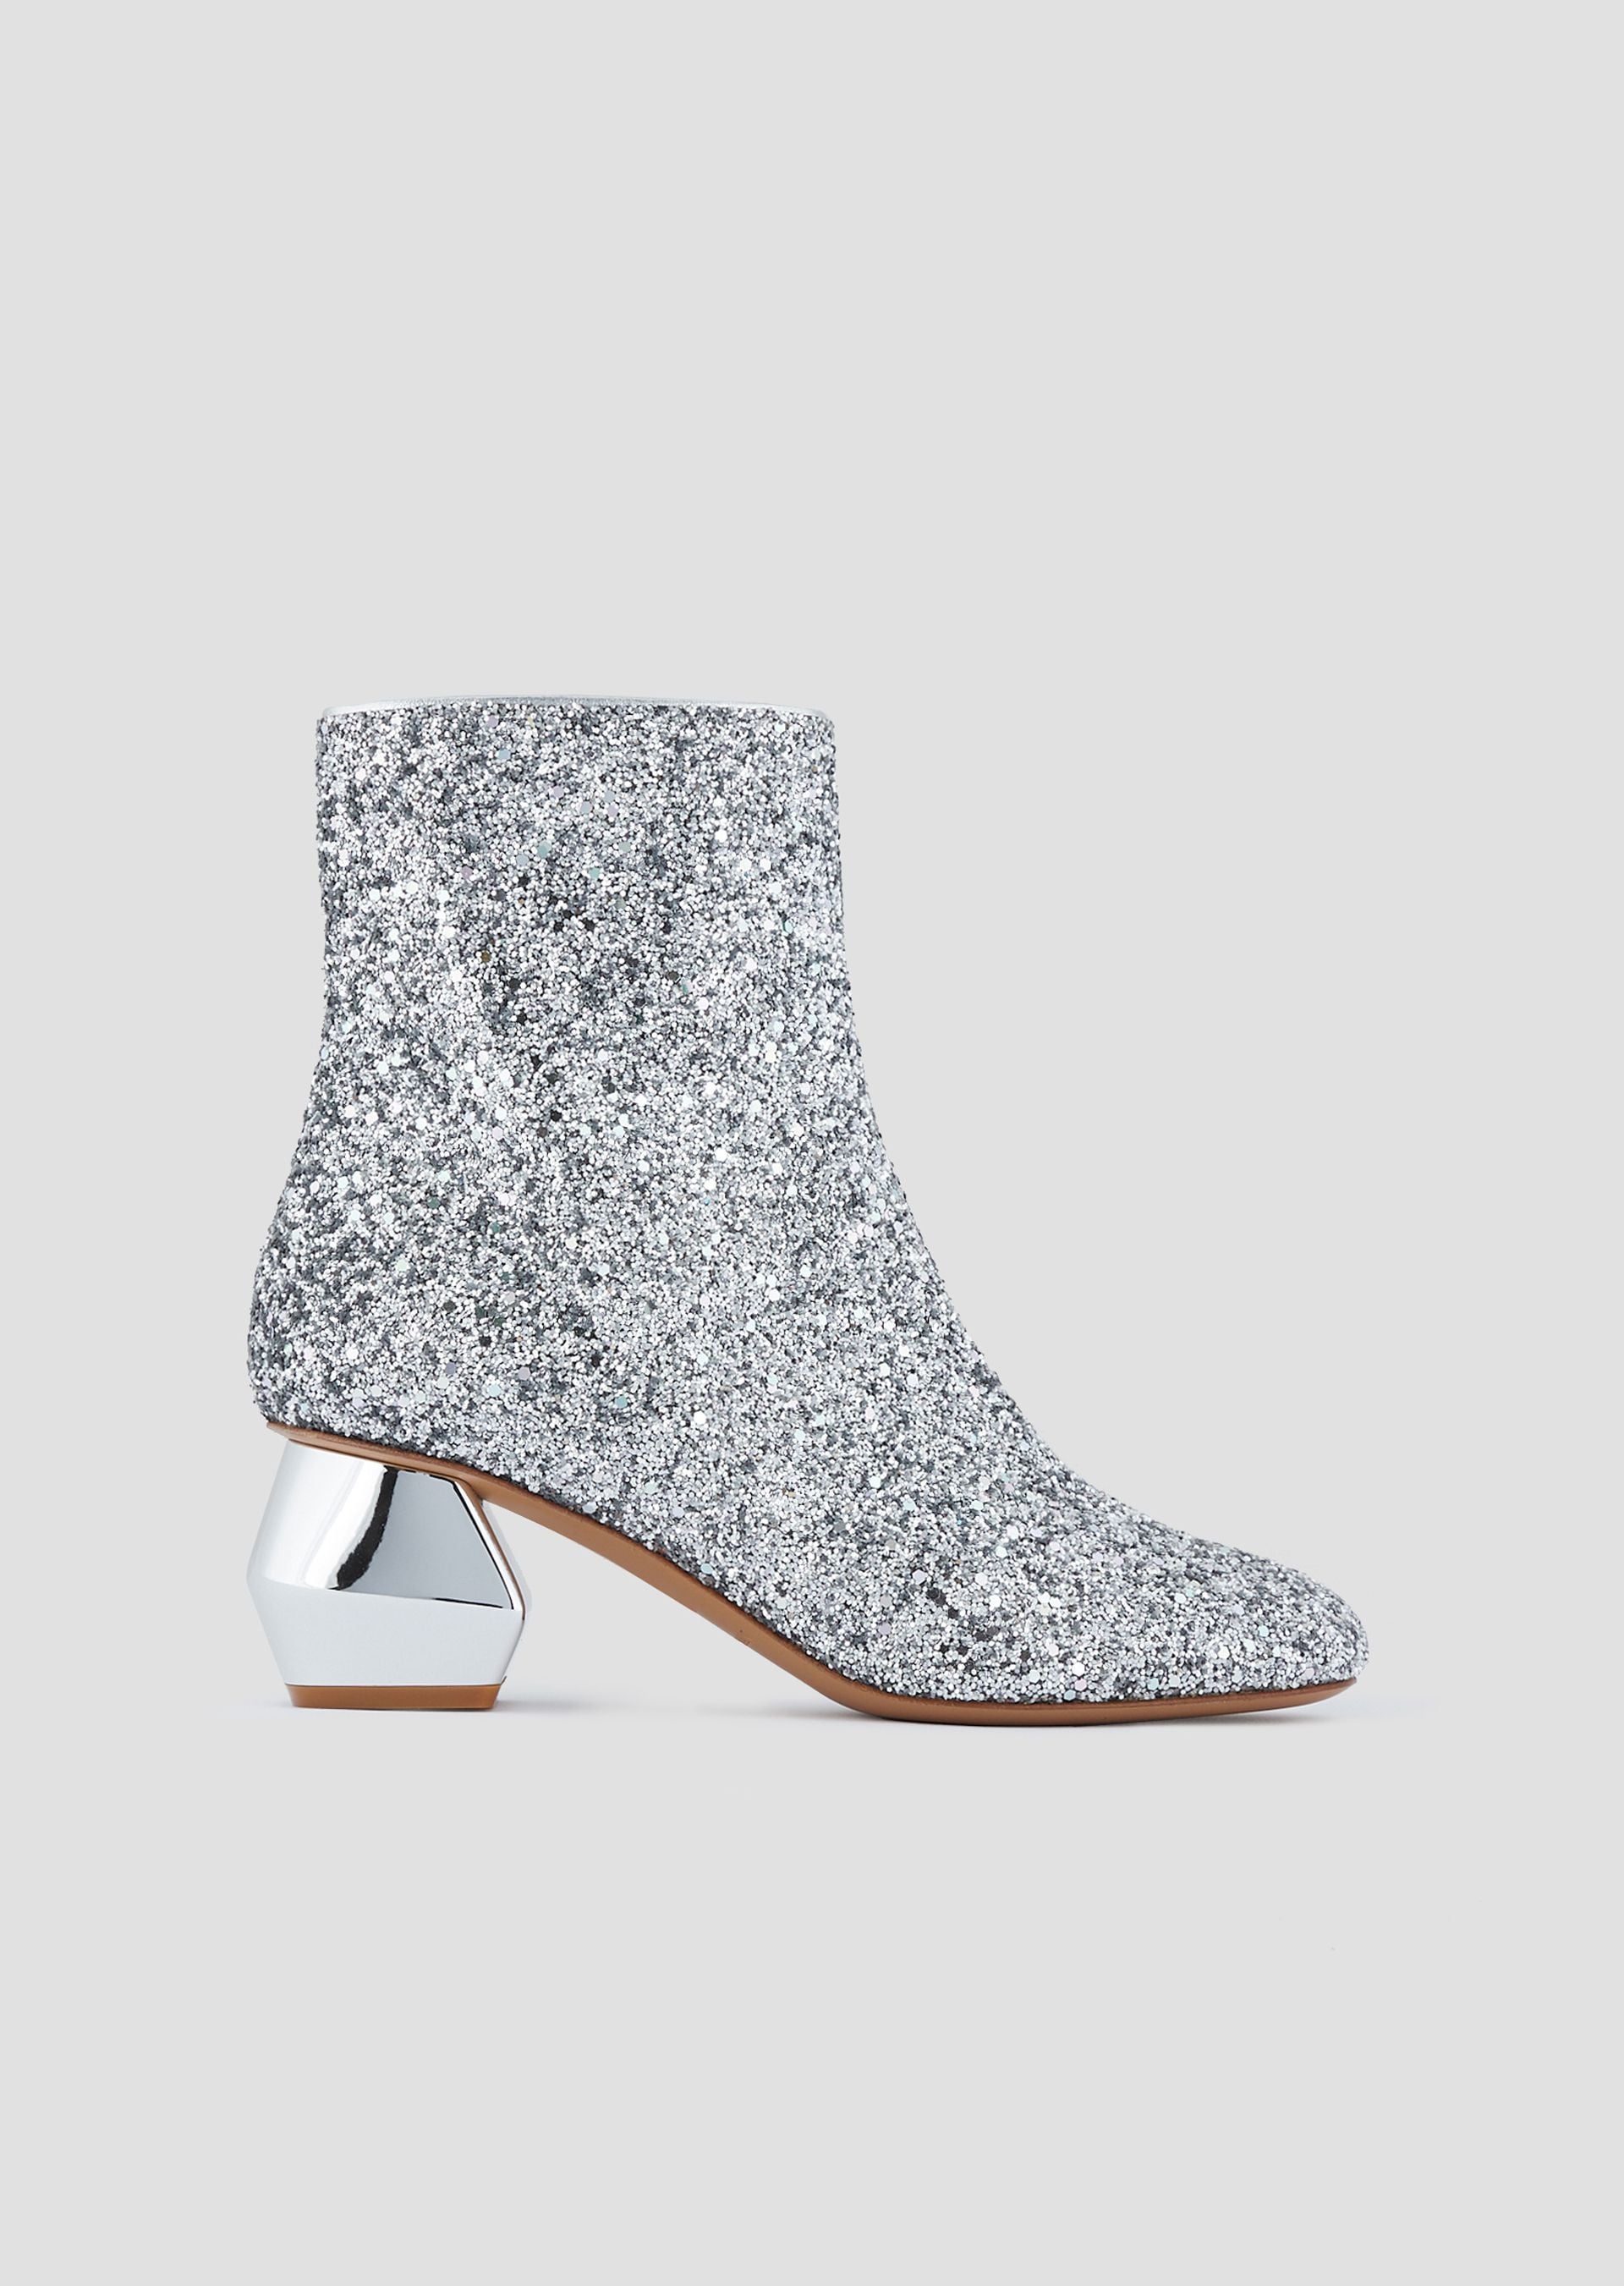 Emporio Armani Glitter Ankle Boots | 9 Chic Boot Trends to Kick-Start the  New Season in Style | POPSUGAR Fashion Photo 53